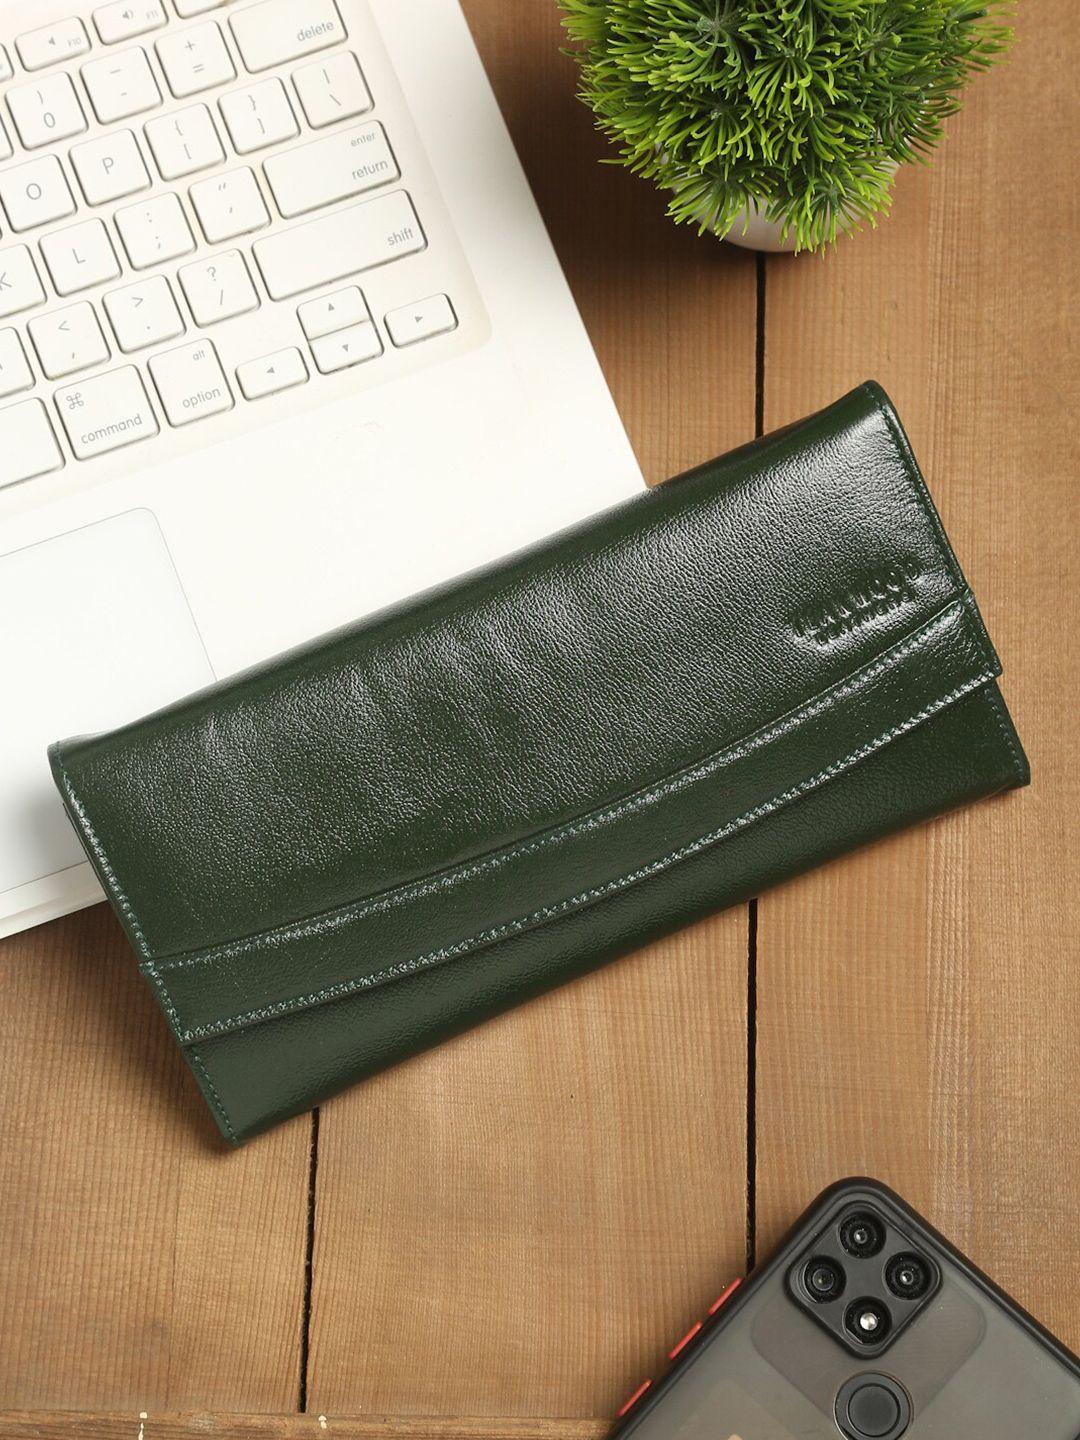 teakwood leathers green leather purse clutch